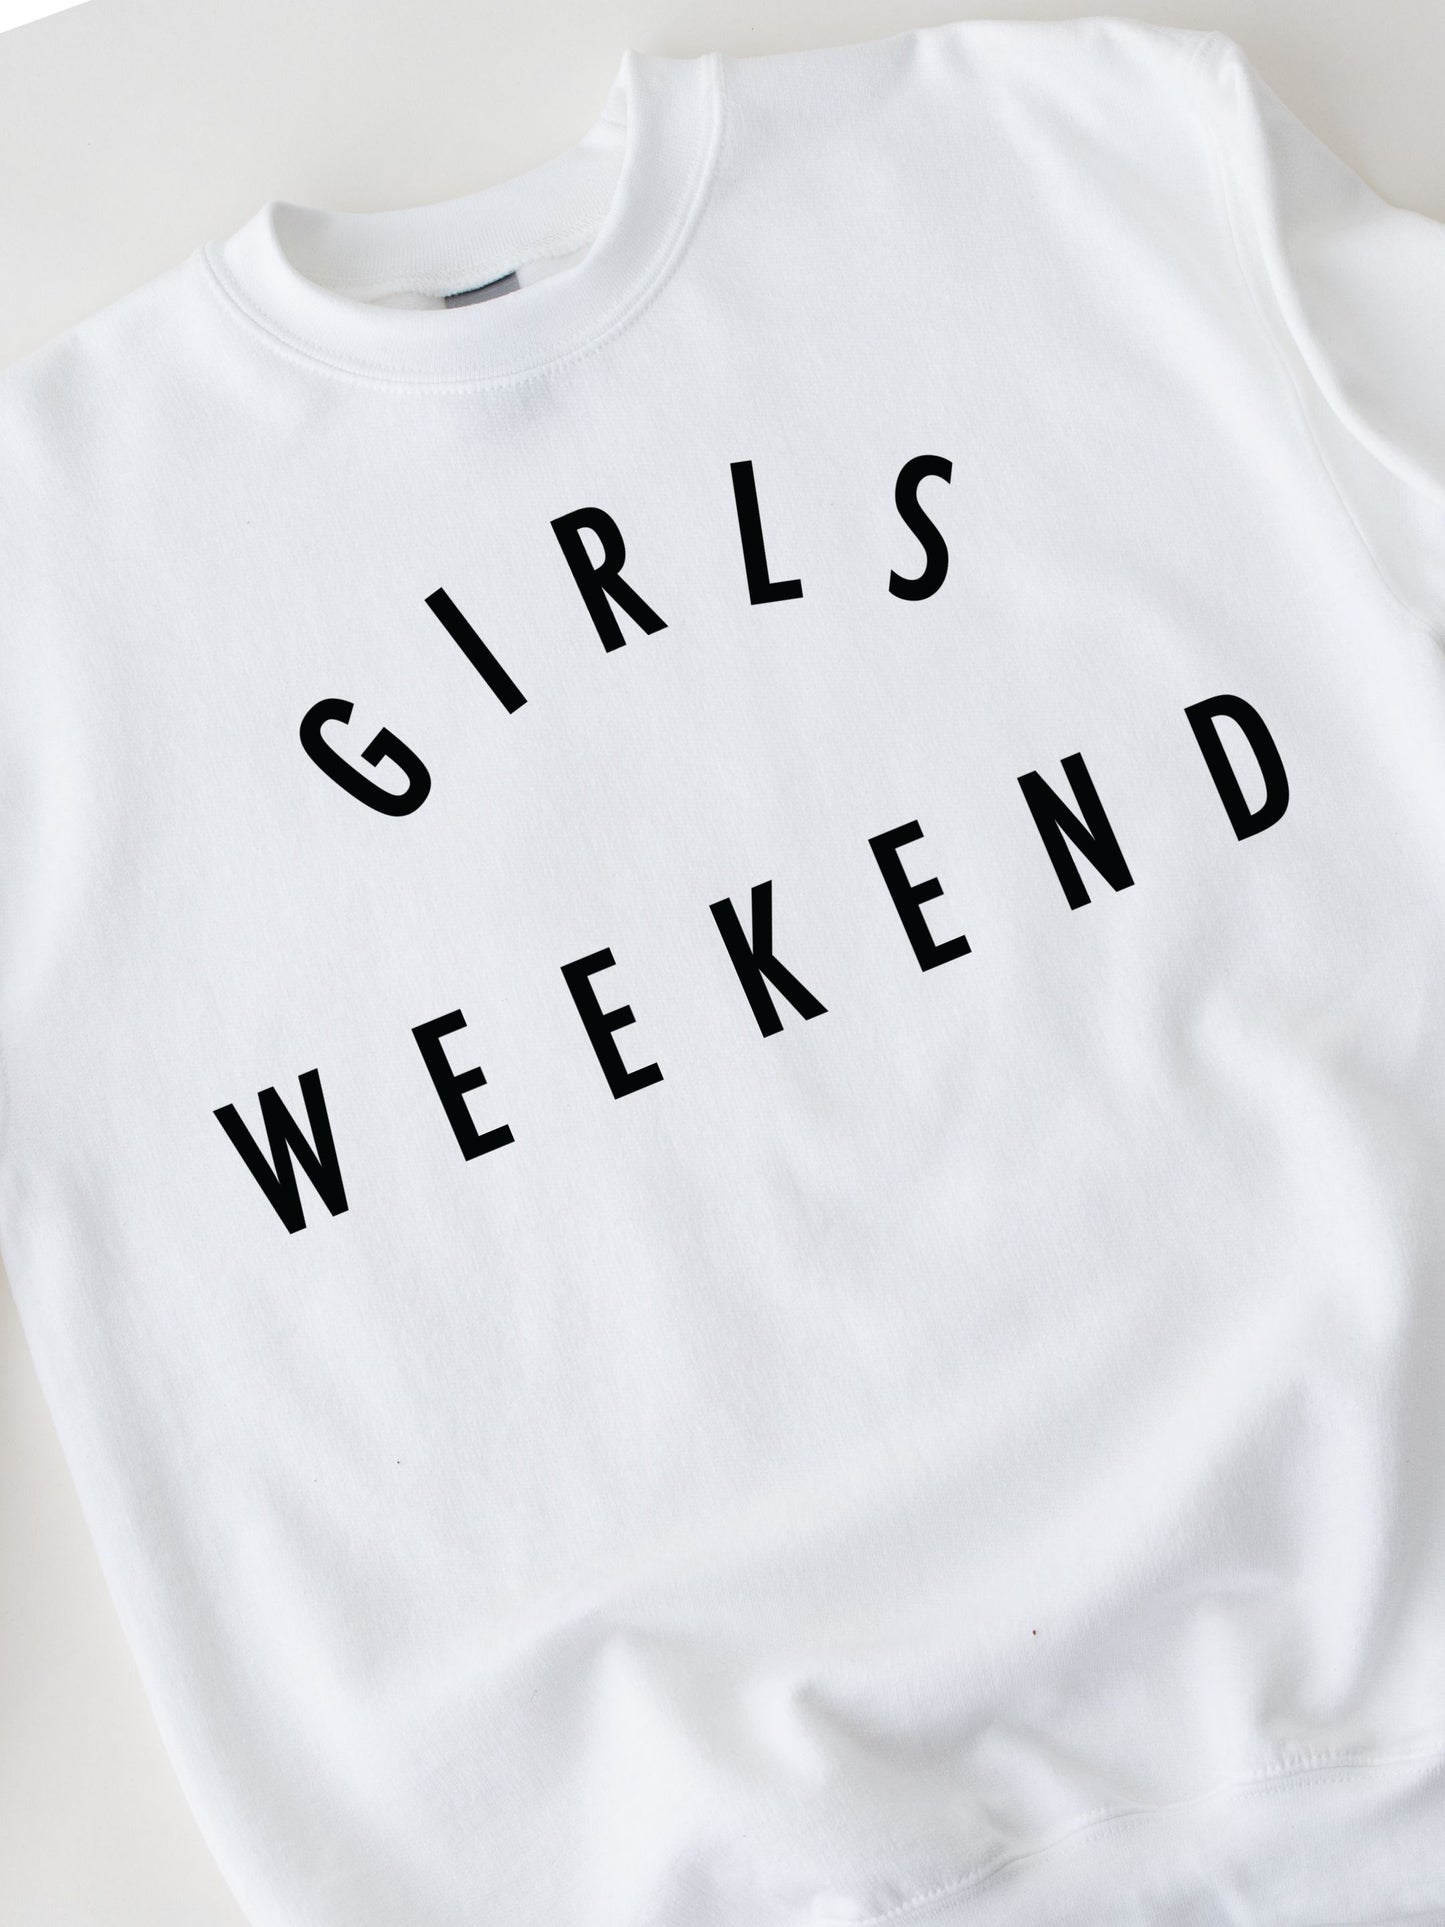 Classic Girls Weekend Sweatshirt - cozy and minimalist crewneck